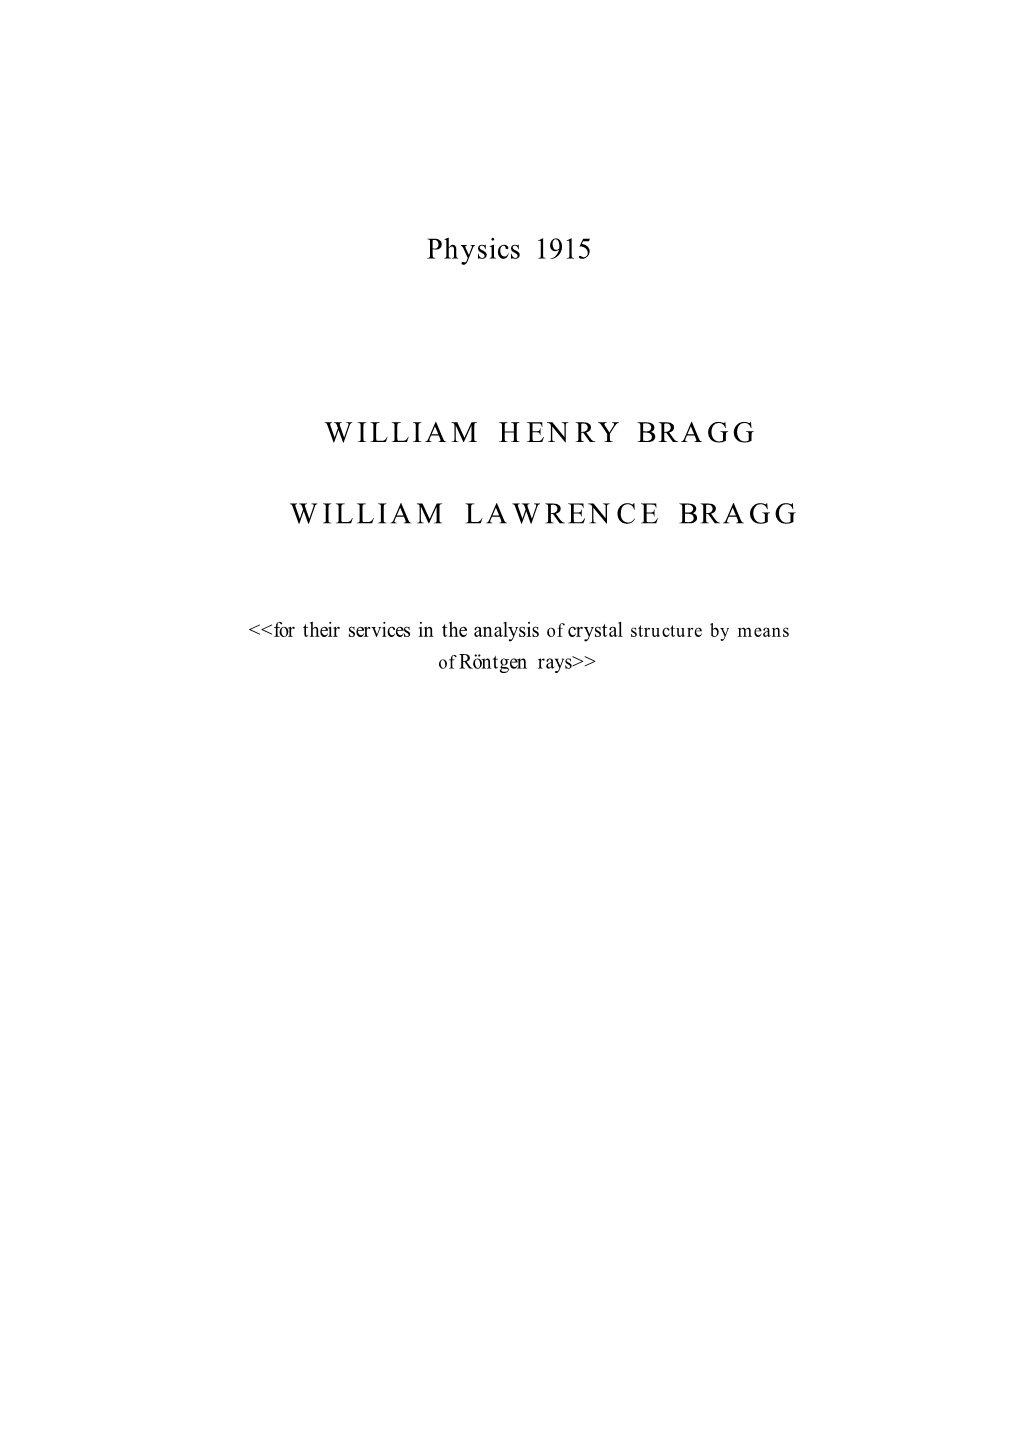 Physics 1915 WILLIAM HENRY BRAGG WILLIAM LAWRENCE